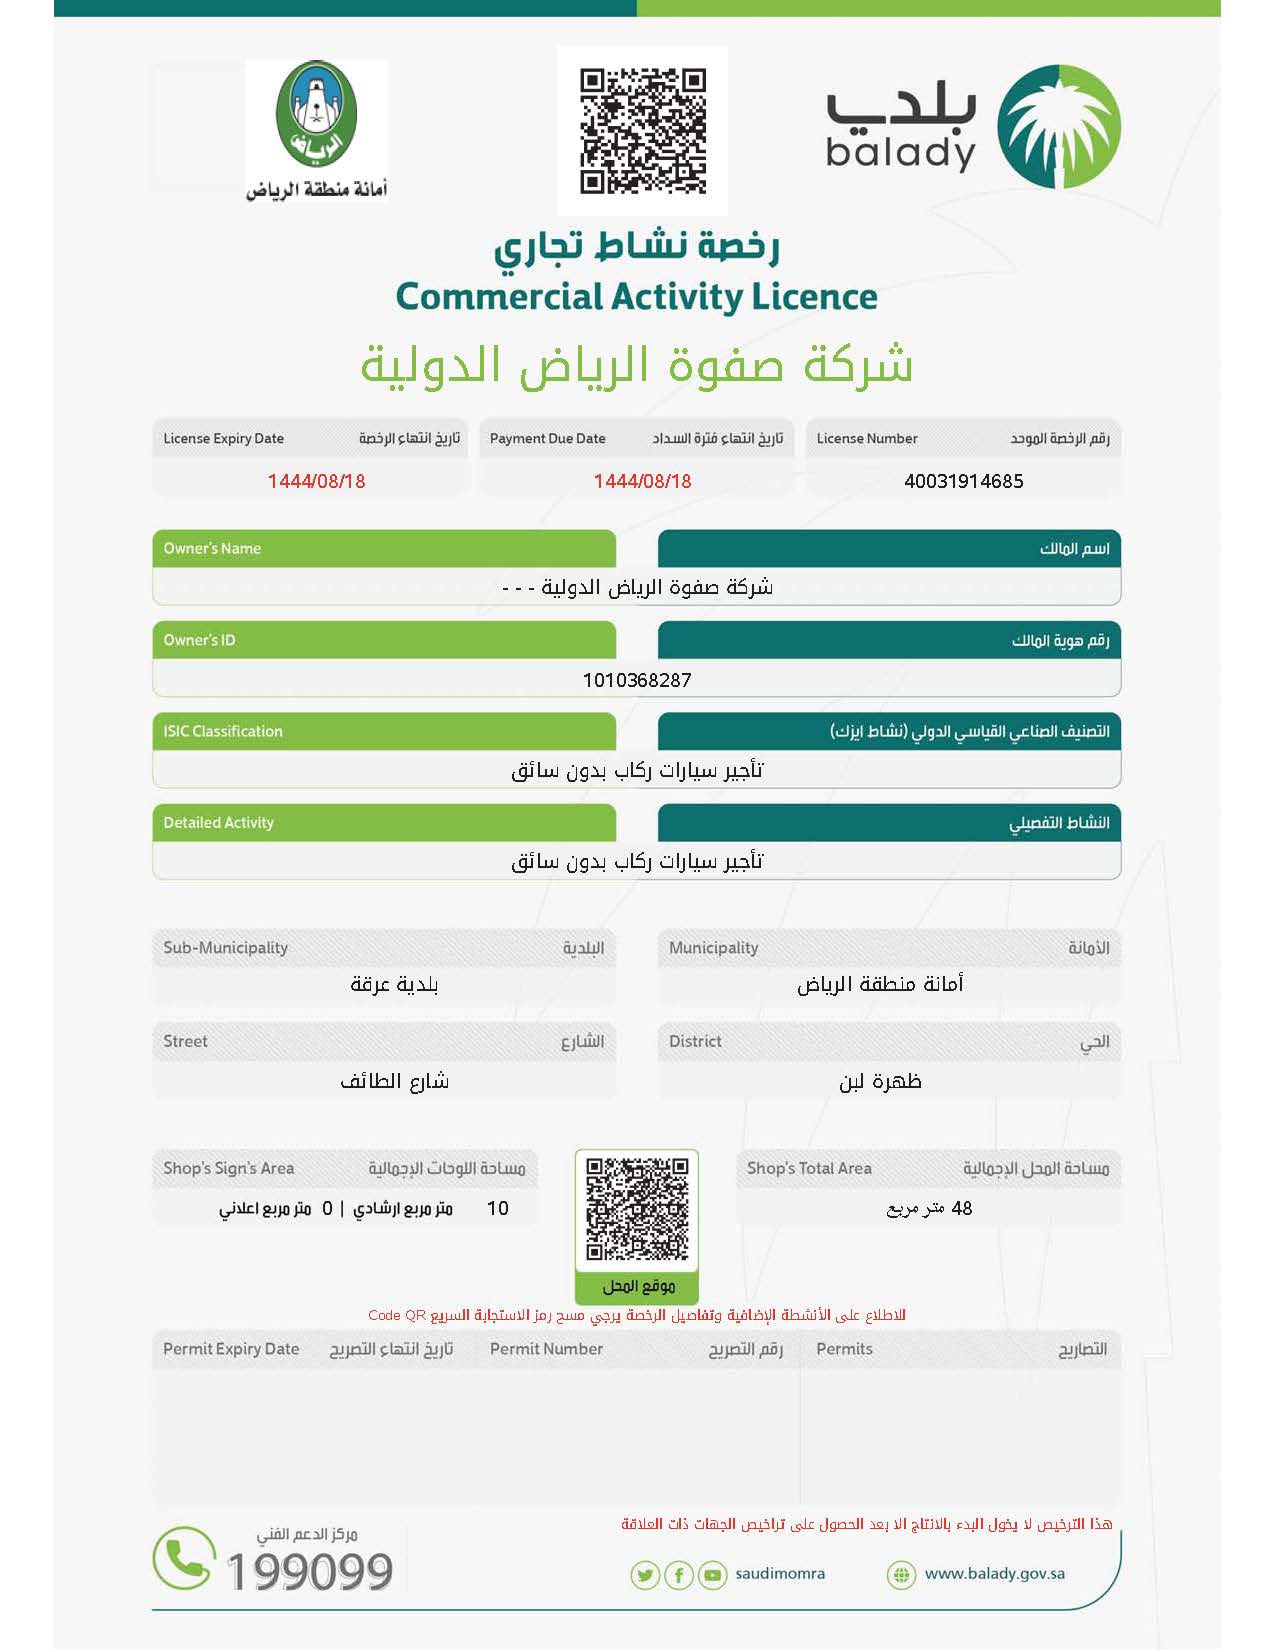 البلديات Page 02 One of the leading companies and a significant number in all its fields